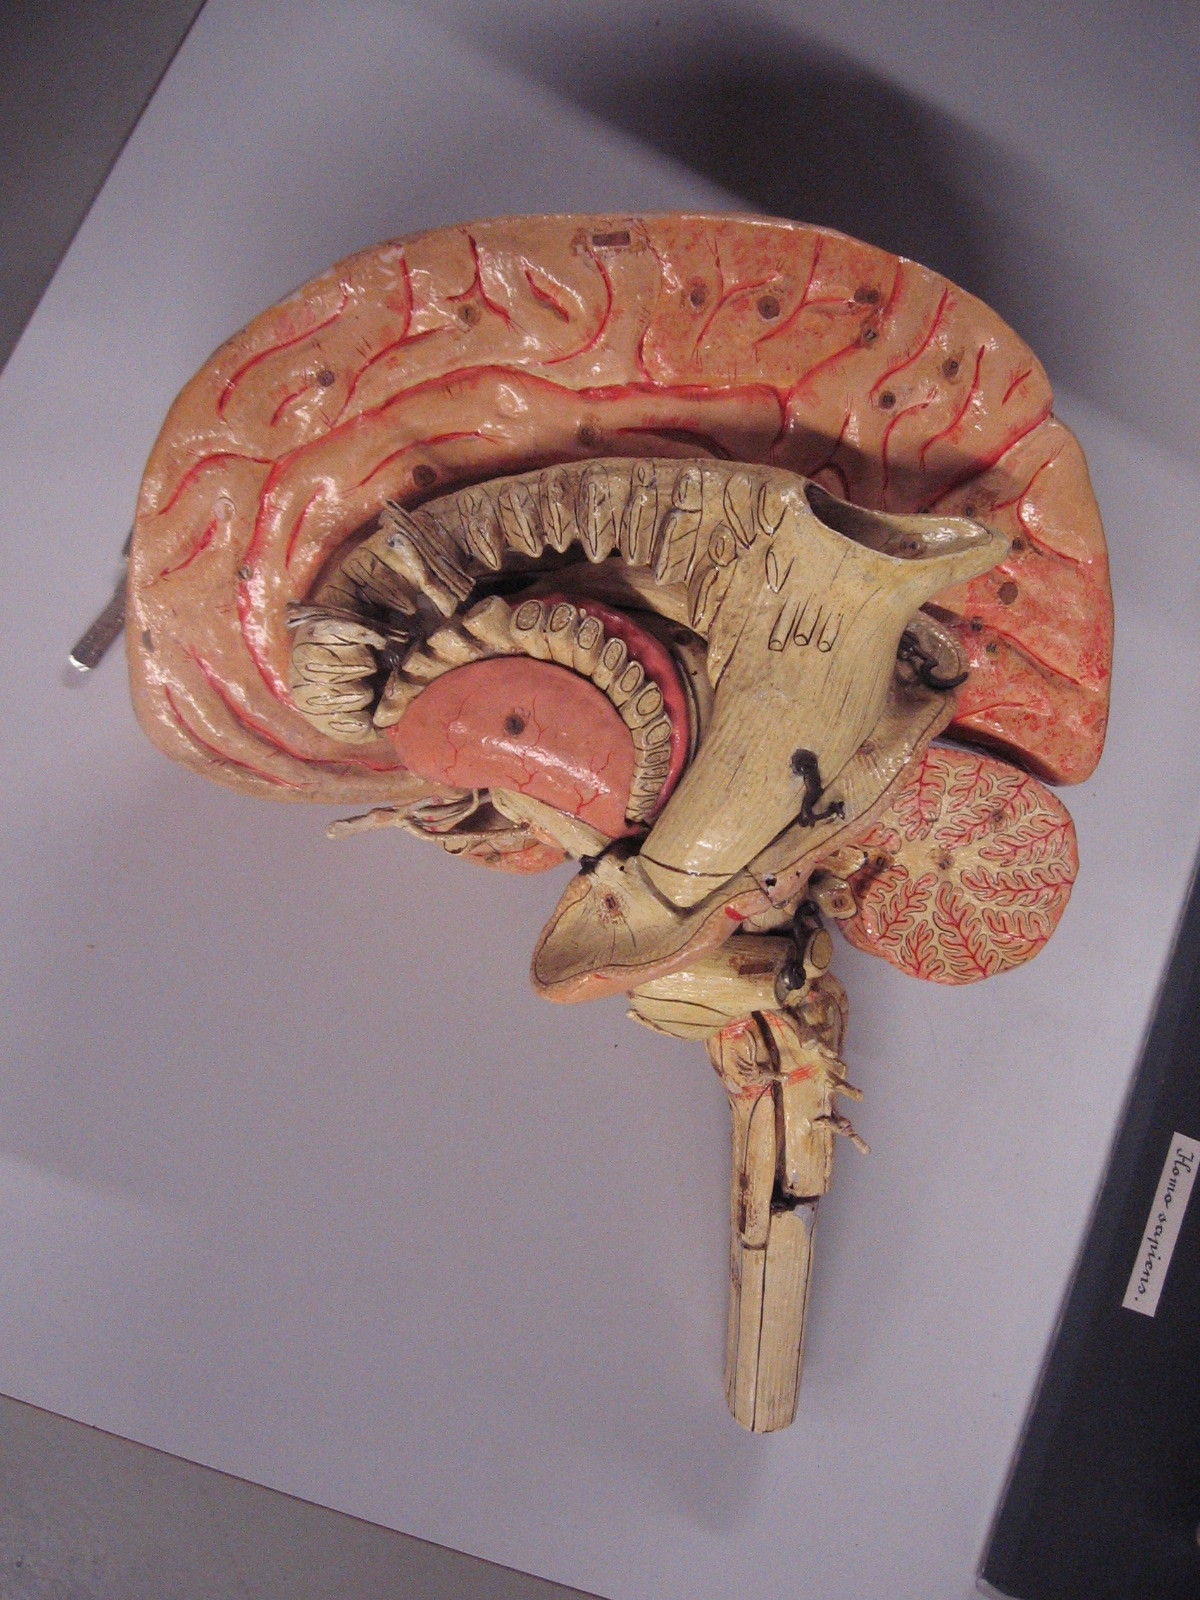 tekst_uitleg nature characters humanoids texture brain brainmodel wood wooden brains antique